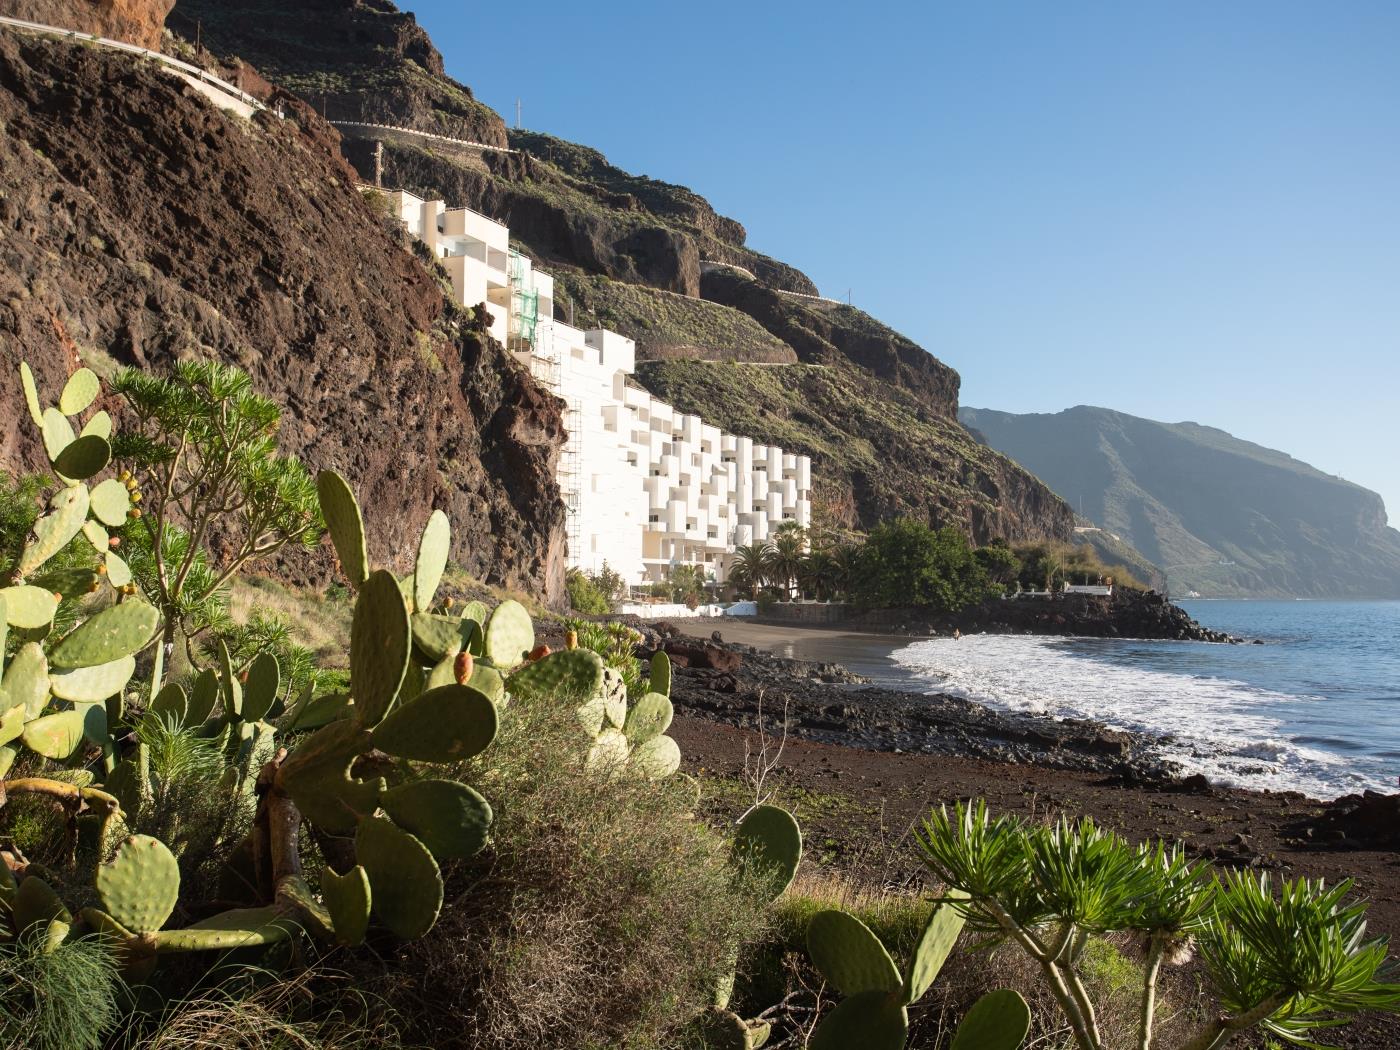 Apartamento a estrenar, magnifica vista a la playa en Santa Cruz de Tenerife